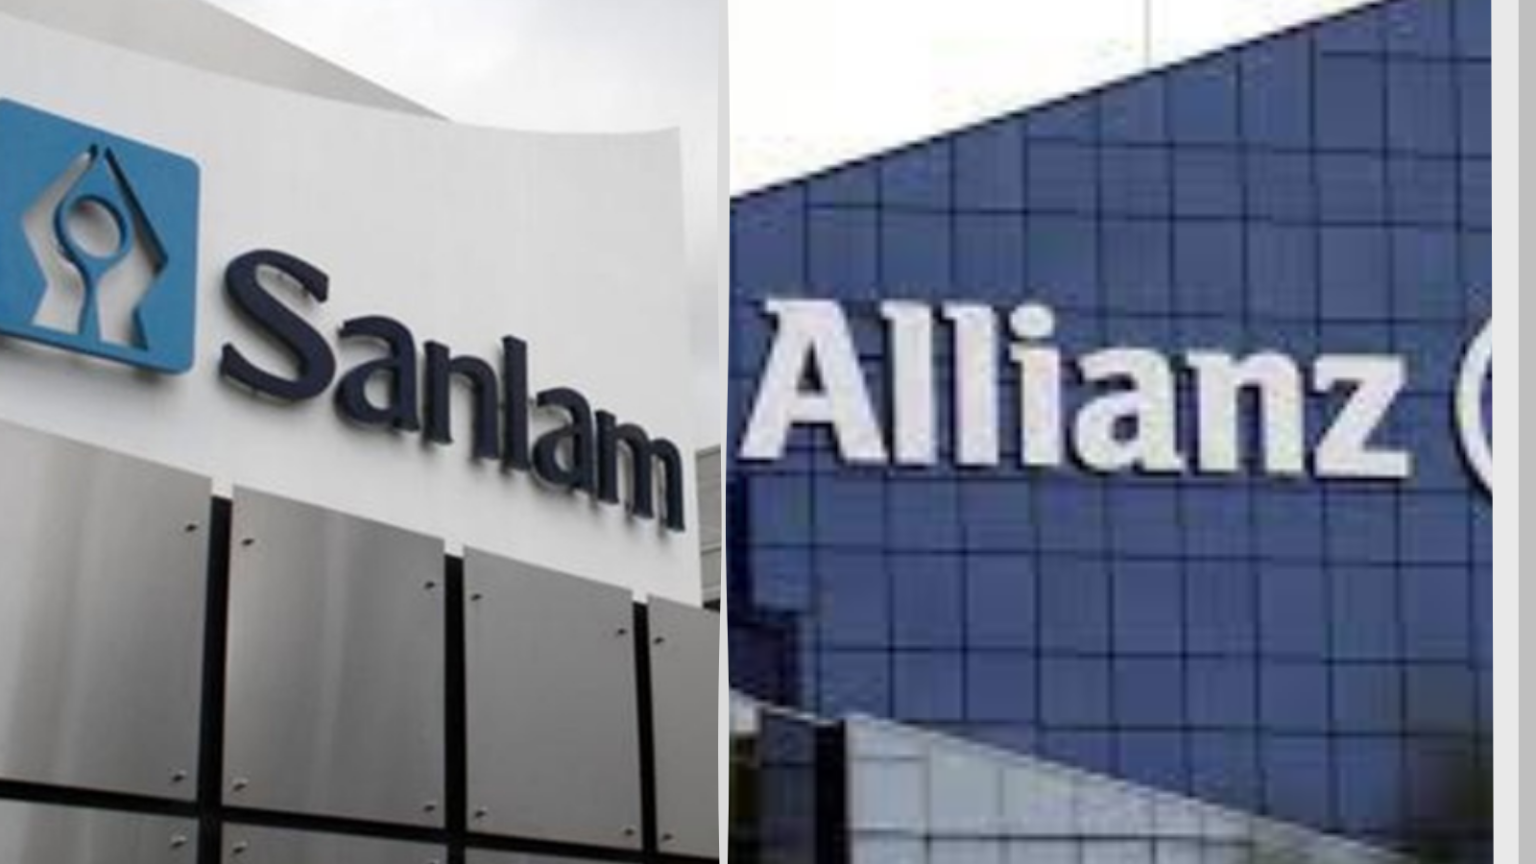 $2.1 billion landmark merger between Insurance giants Allianz and Sanlam. www.theexchange.africa